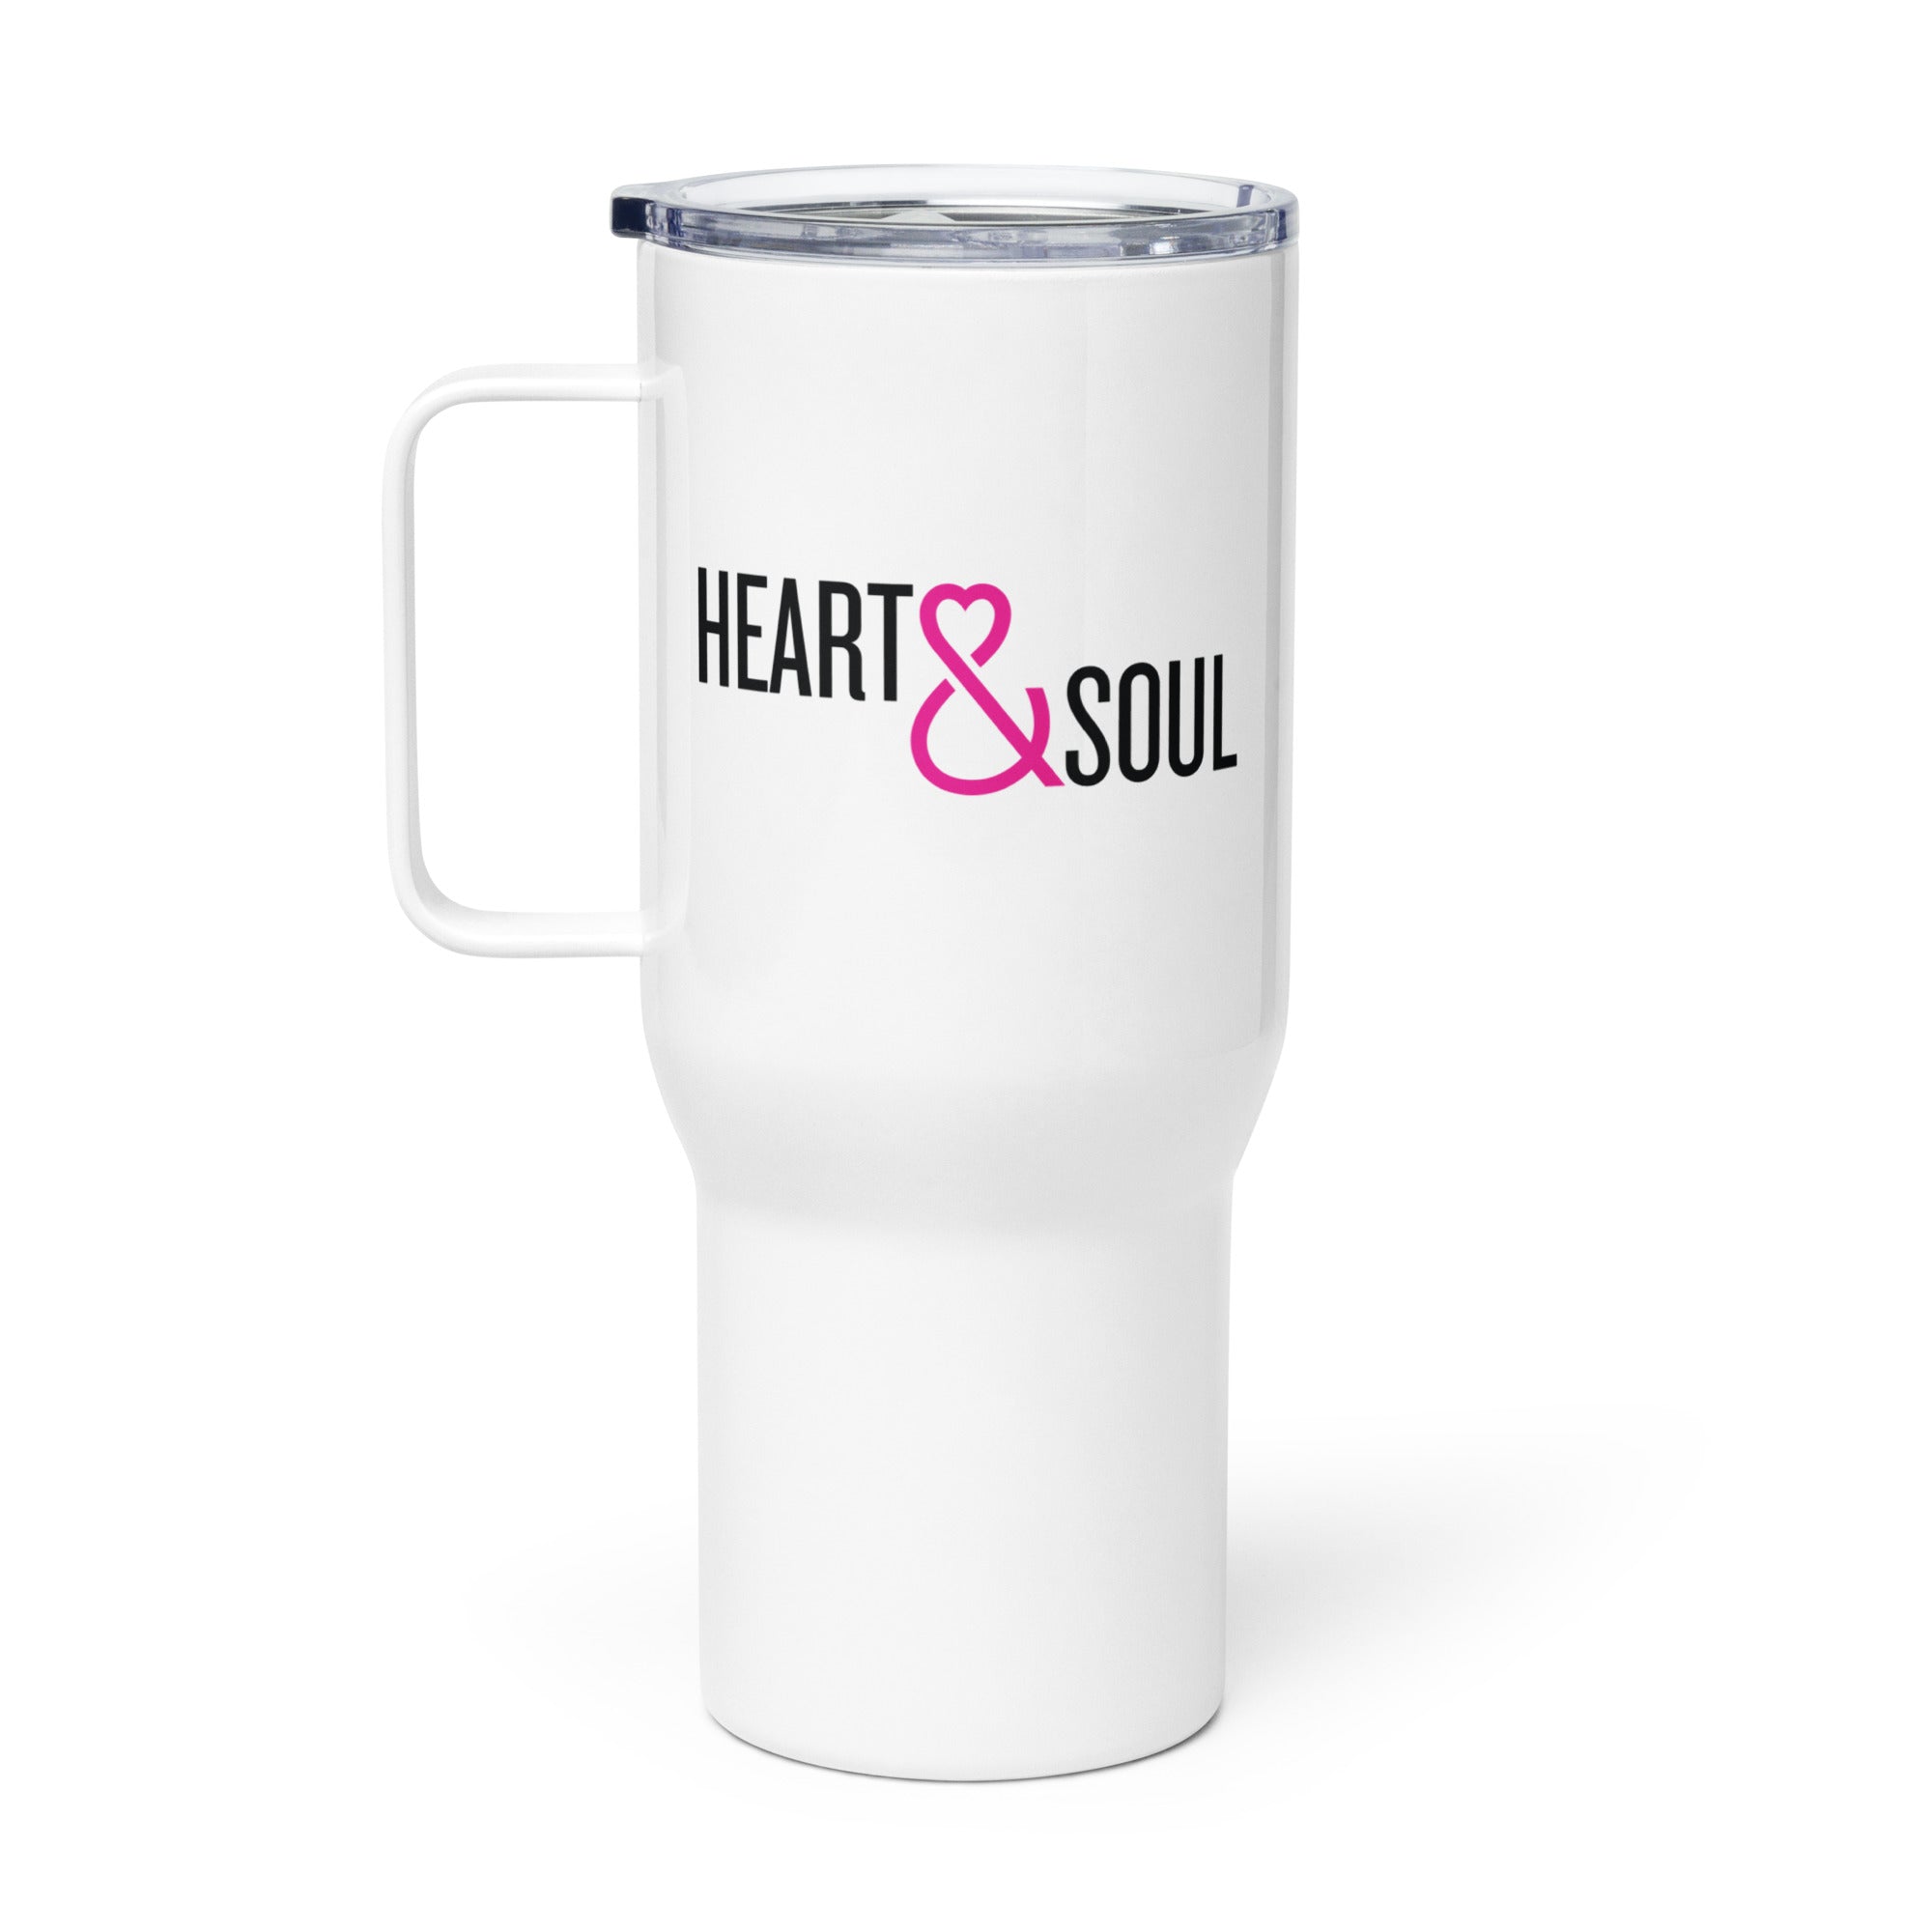 Heart & Soul: Travel Mug